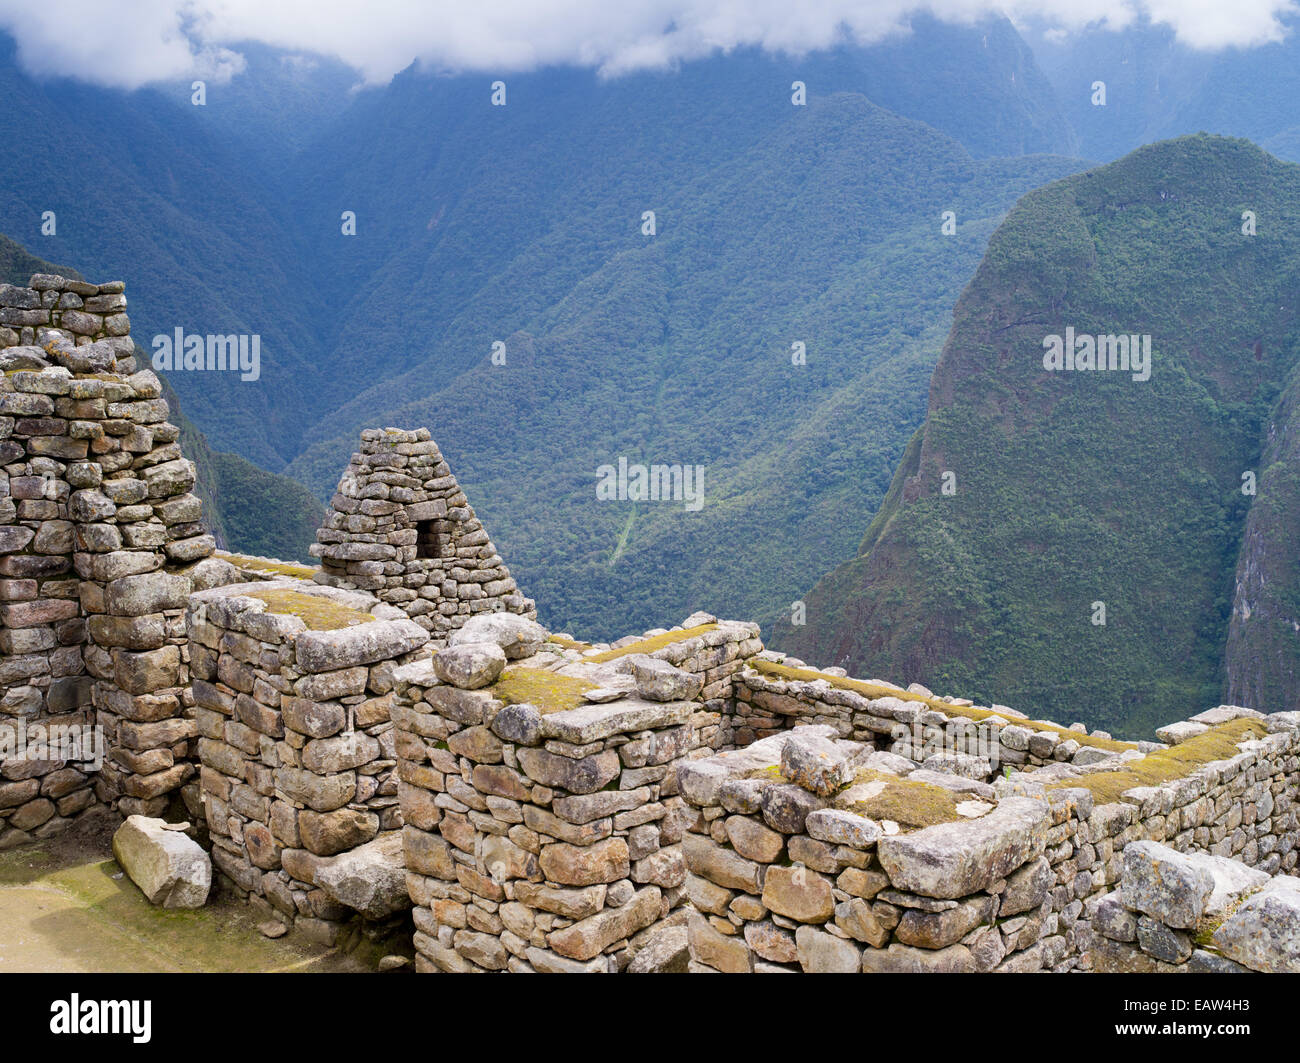 The Incan ruins of Machu Picchu, near Aguas Calientes, Peru. Stock Photo